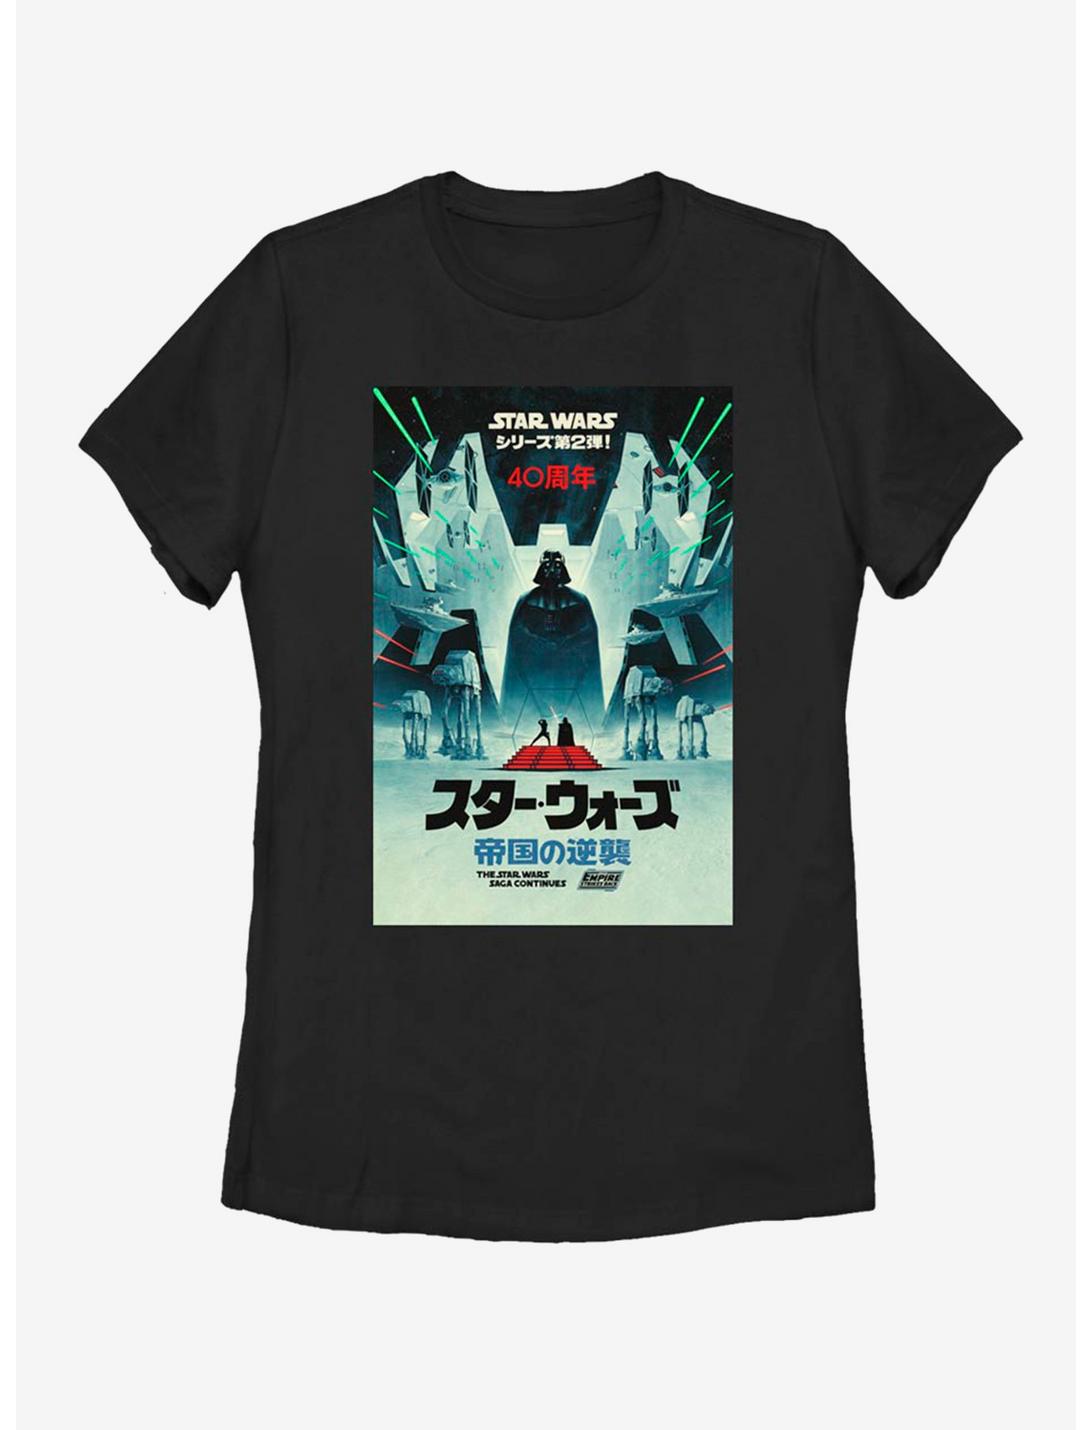 Star Wars Episode V: The Empire Strikes Back 40th Anniversary Japanese Poster Womens T-Shirt, BLACK, hi-res